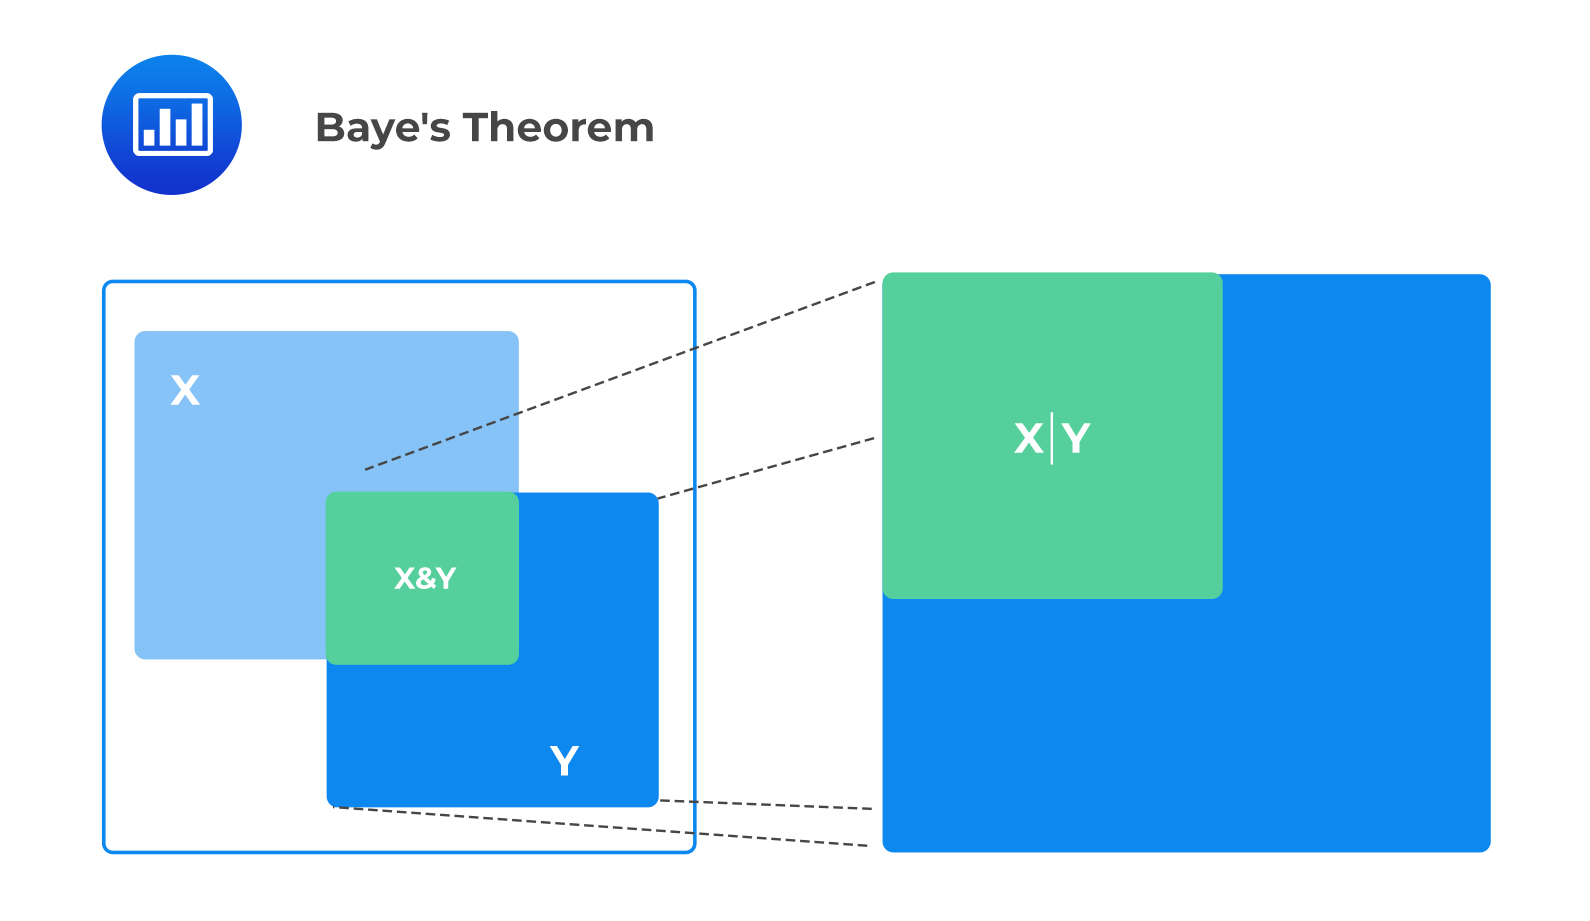 Baye's Theorem